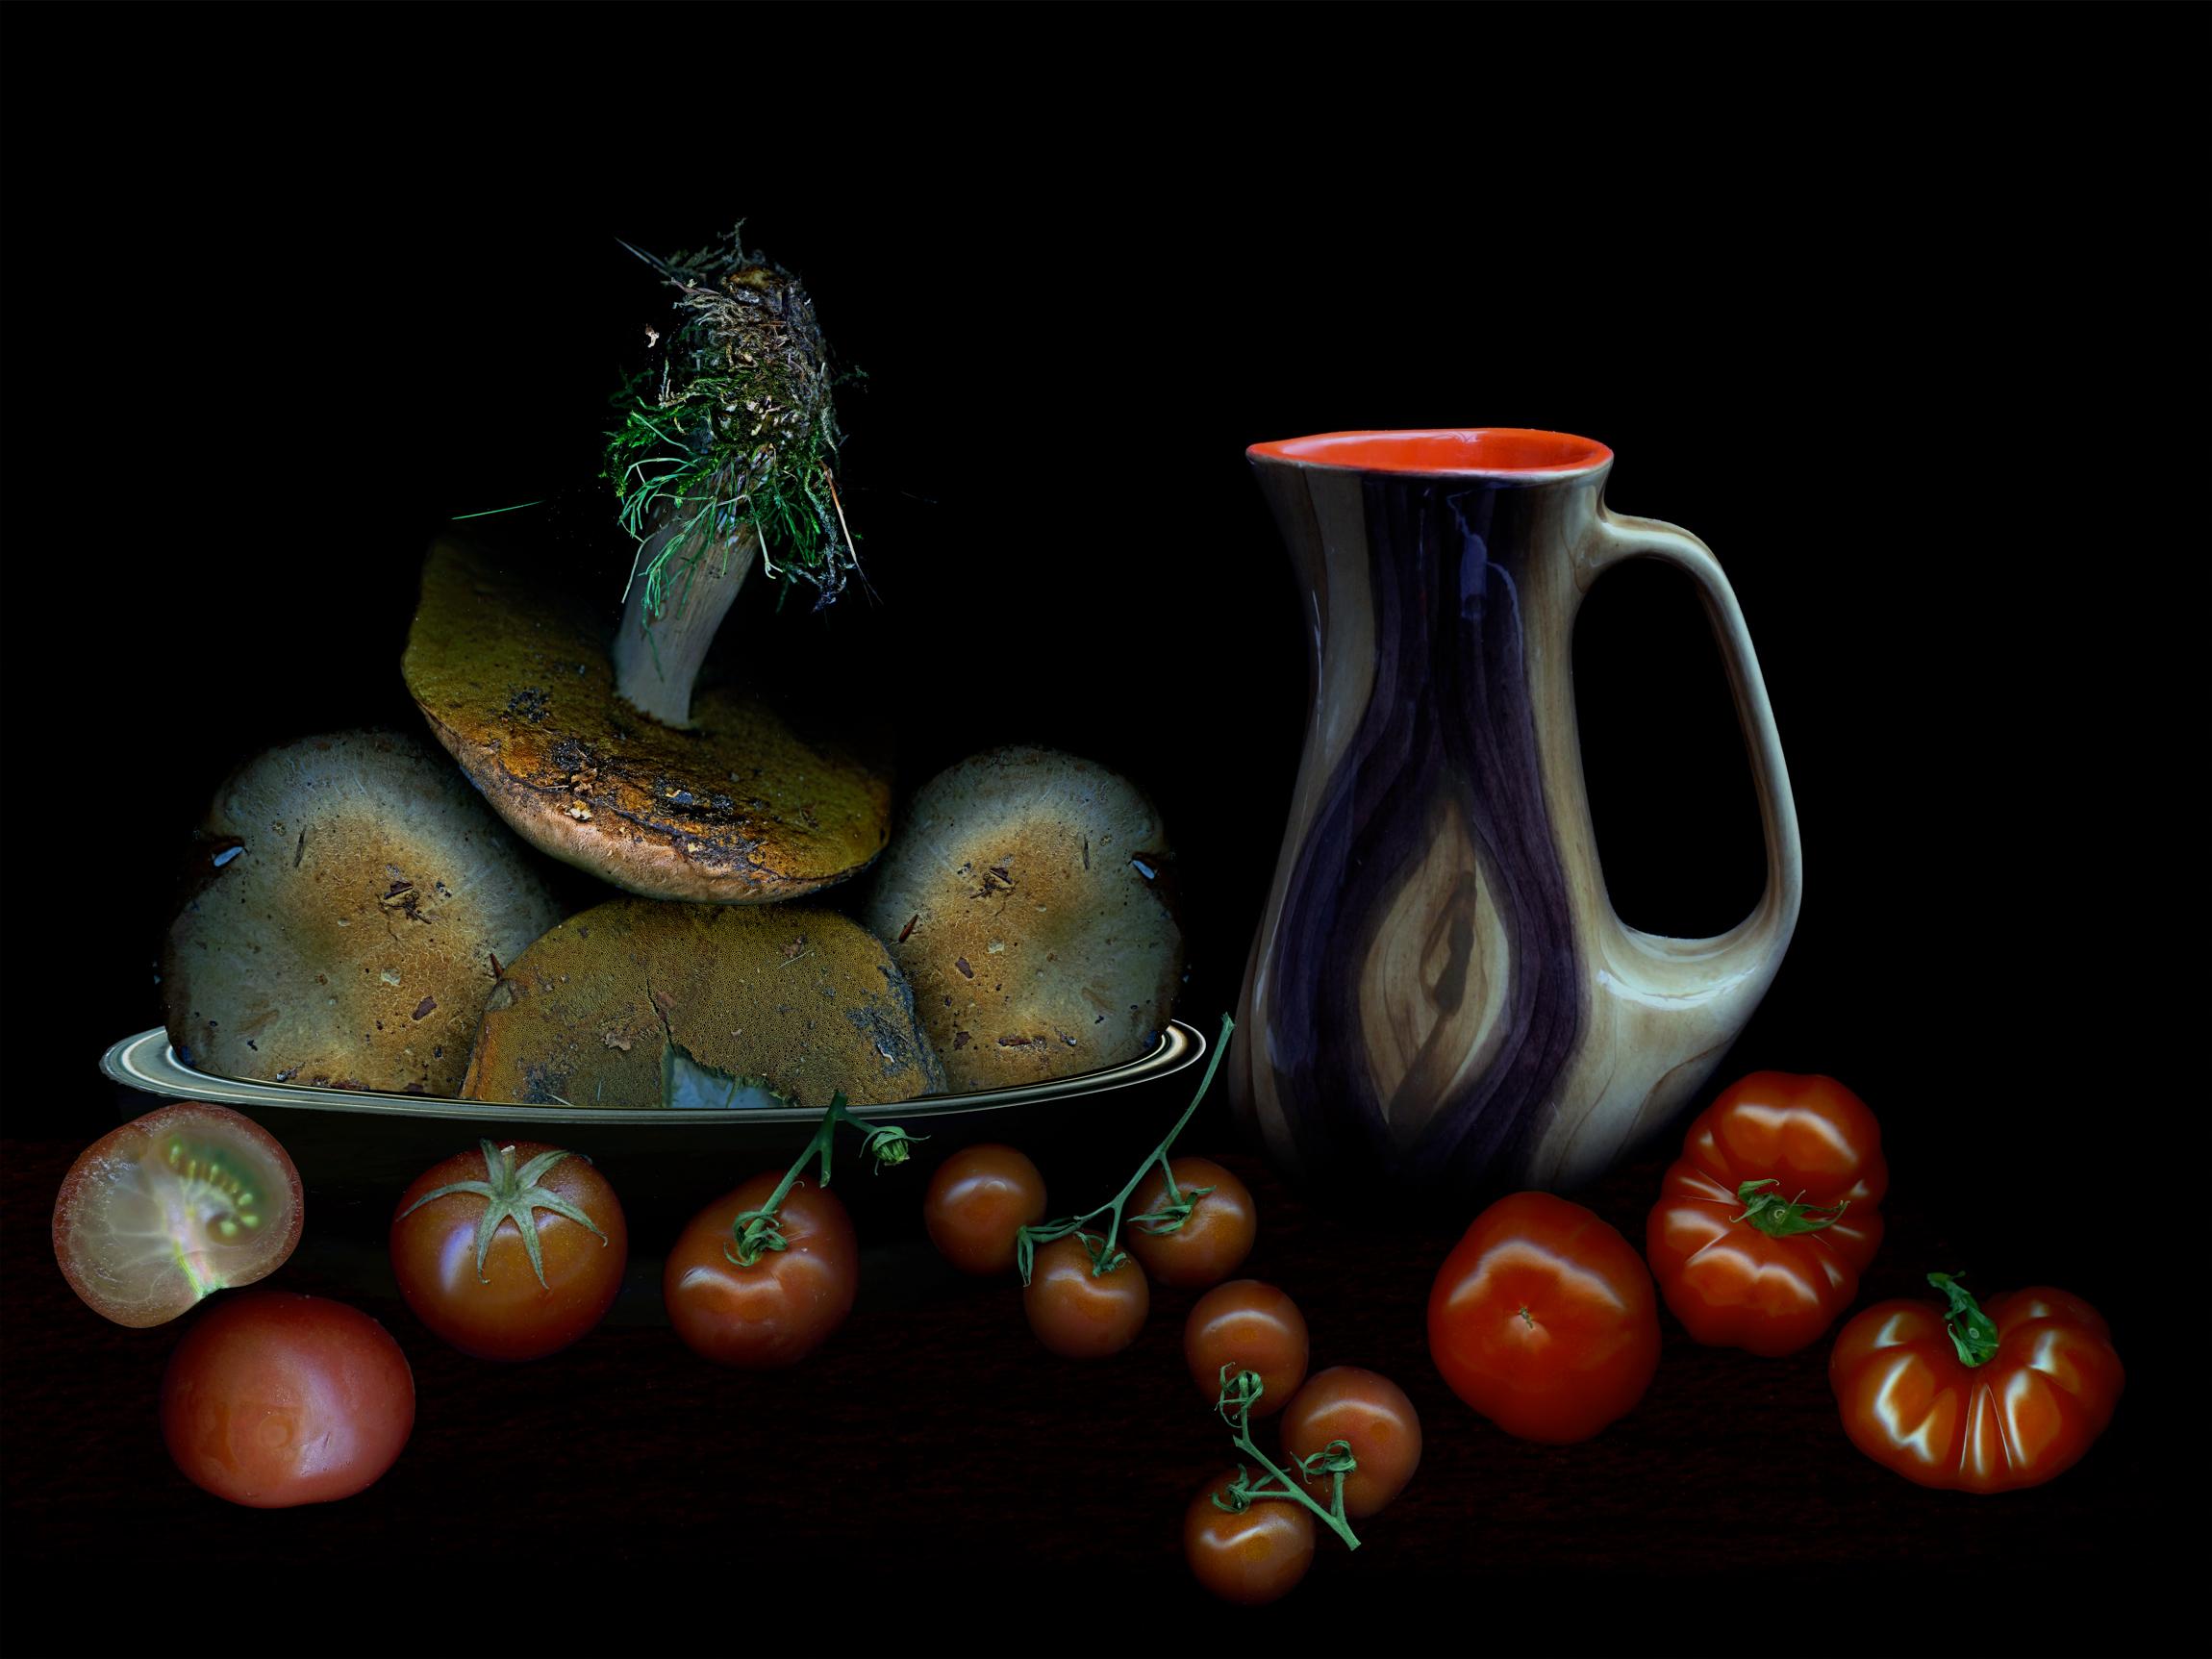 Zoltan Gerliczki Still-Life Photograph - Vegetables from my garden #5 Digital Collage Color Photograph